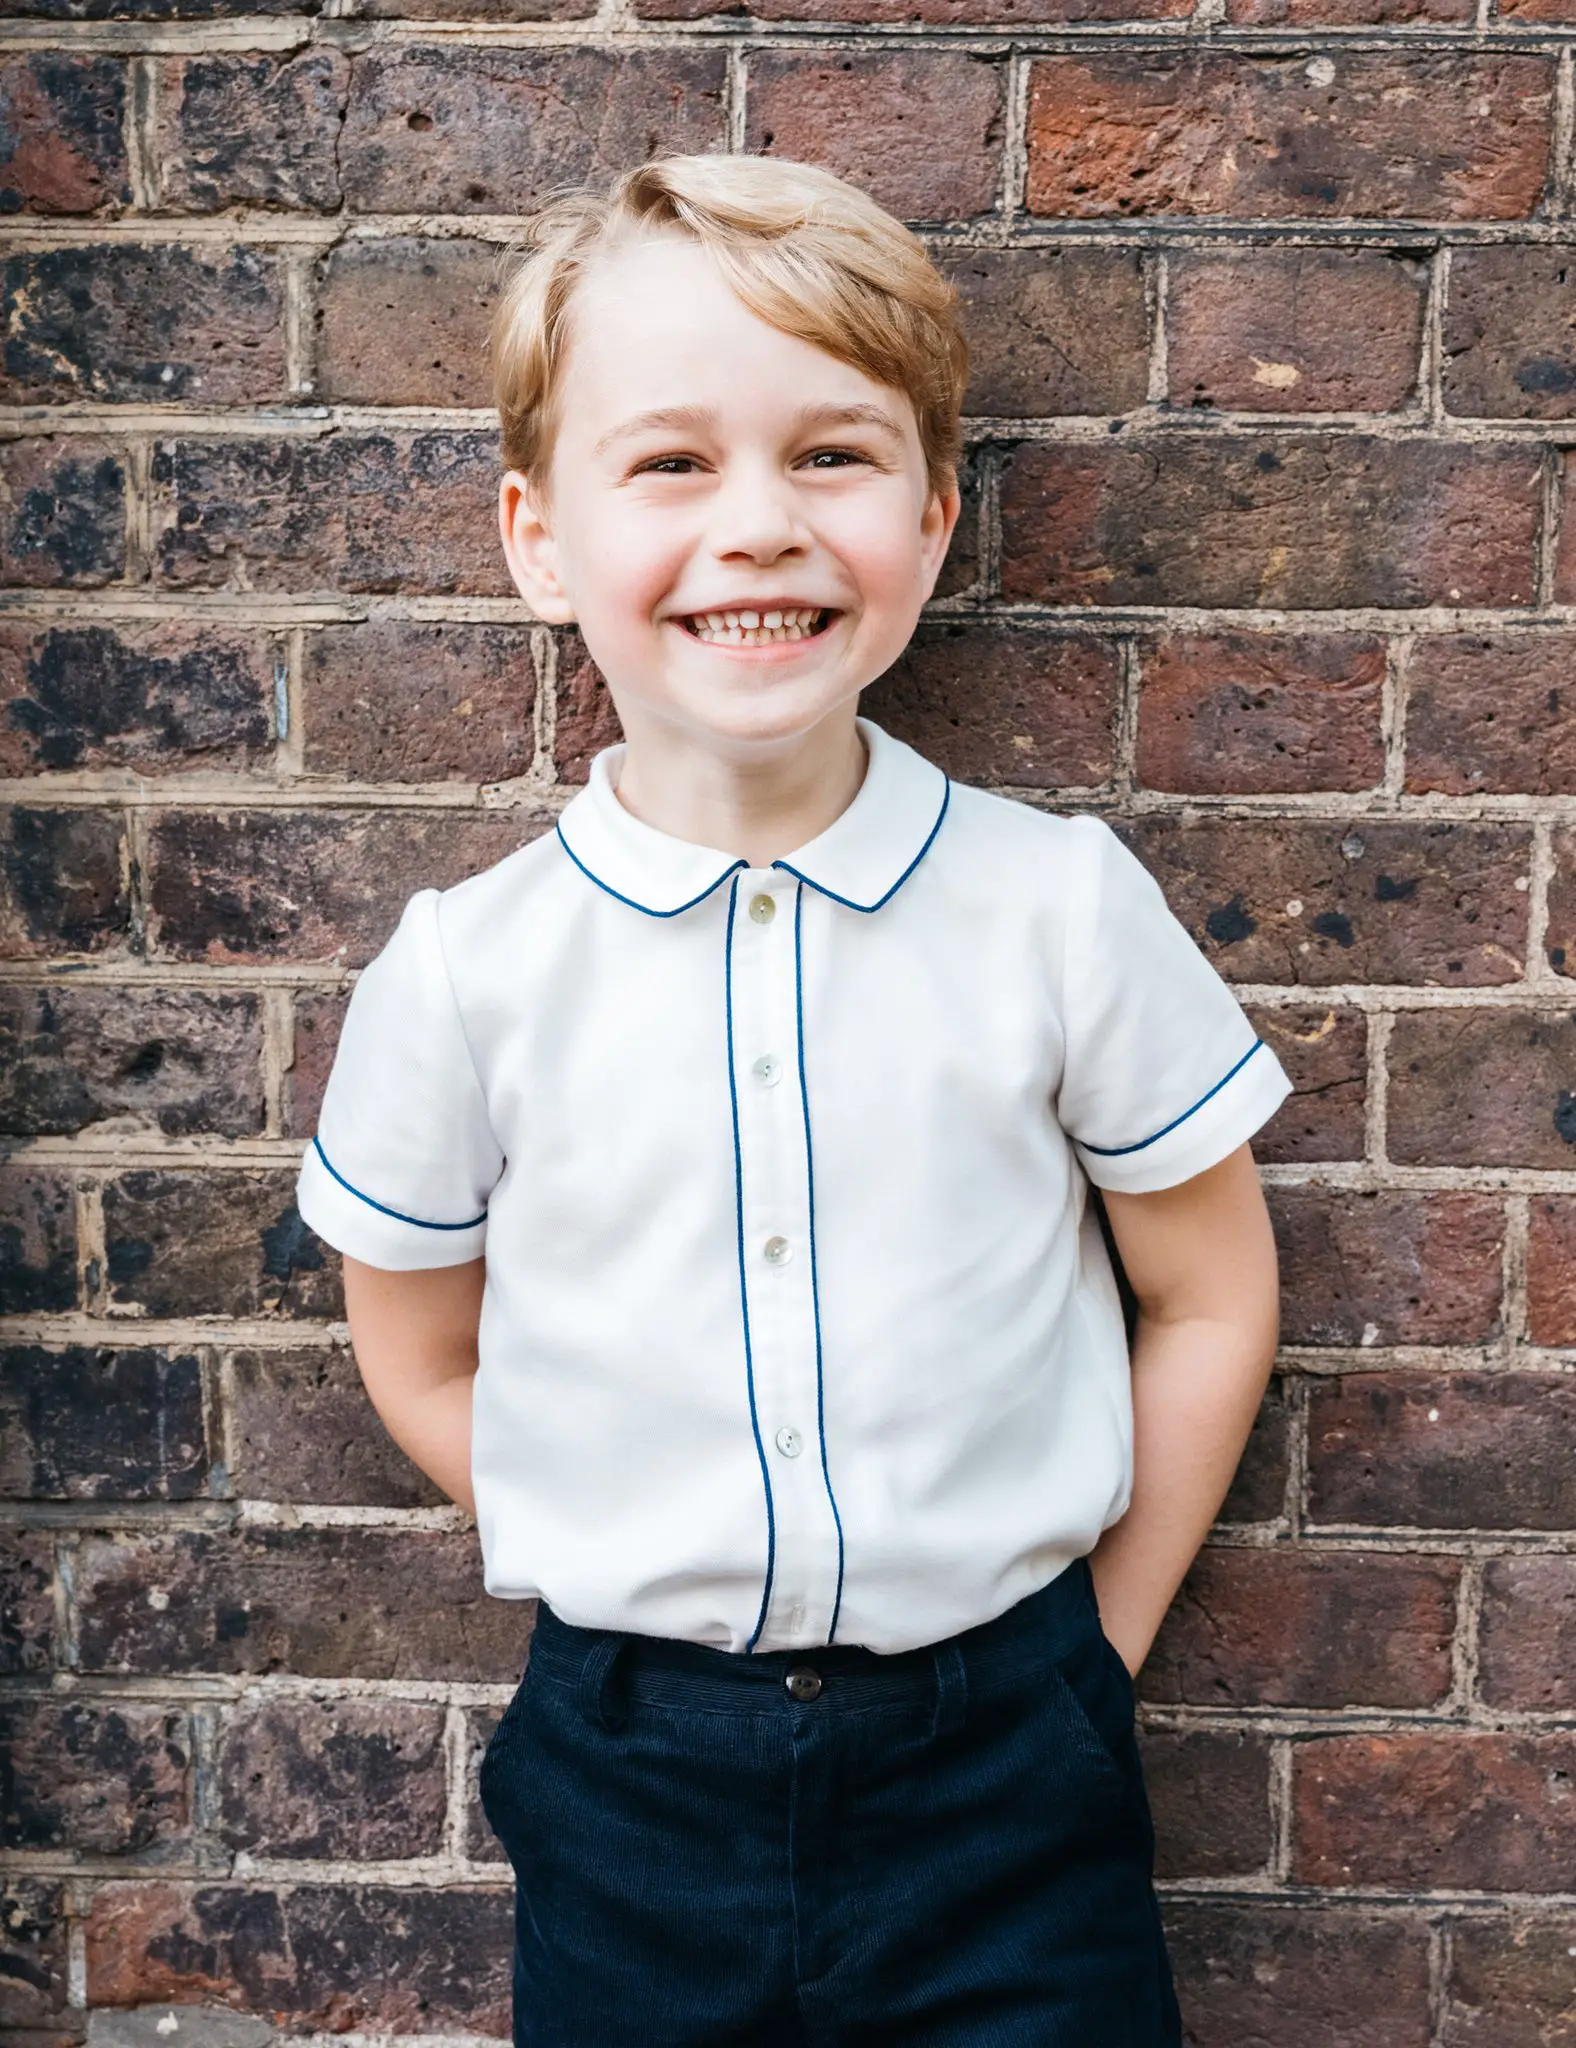 Prince George of Cambridge turns 5